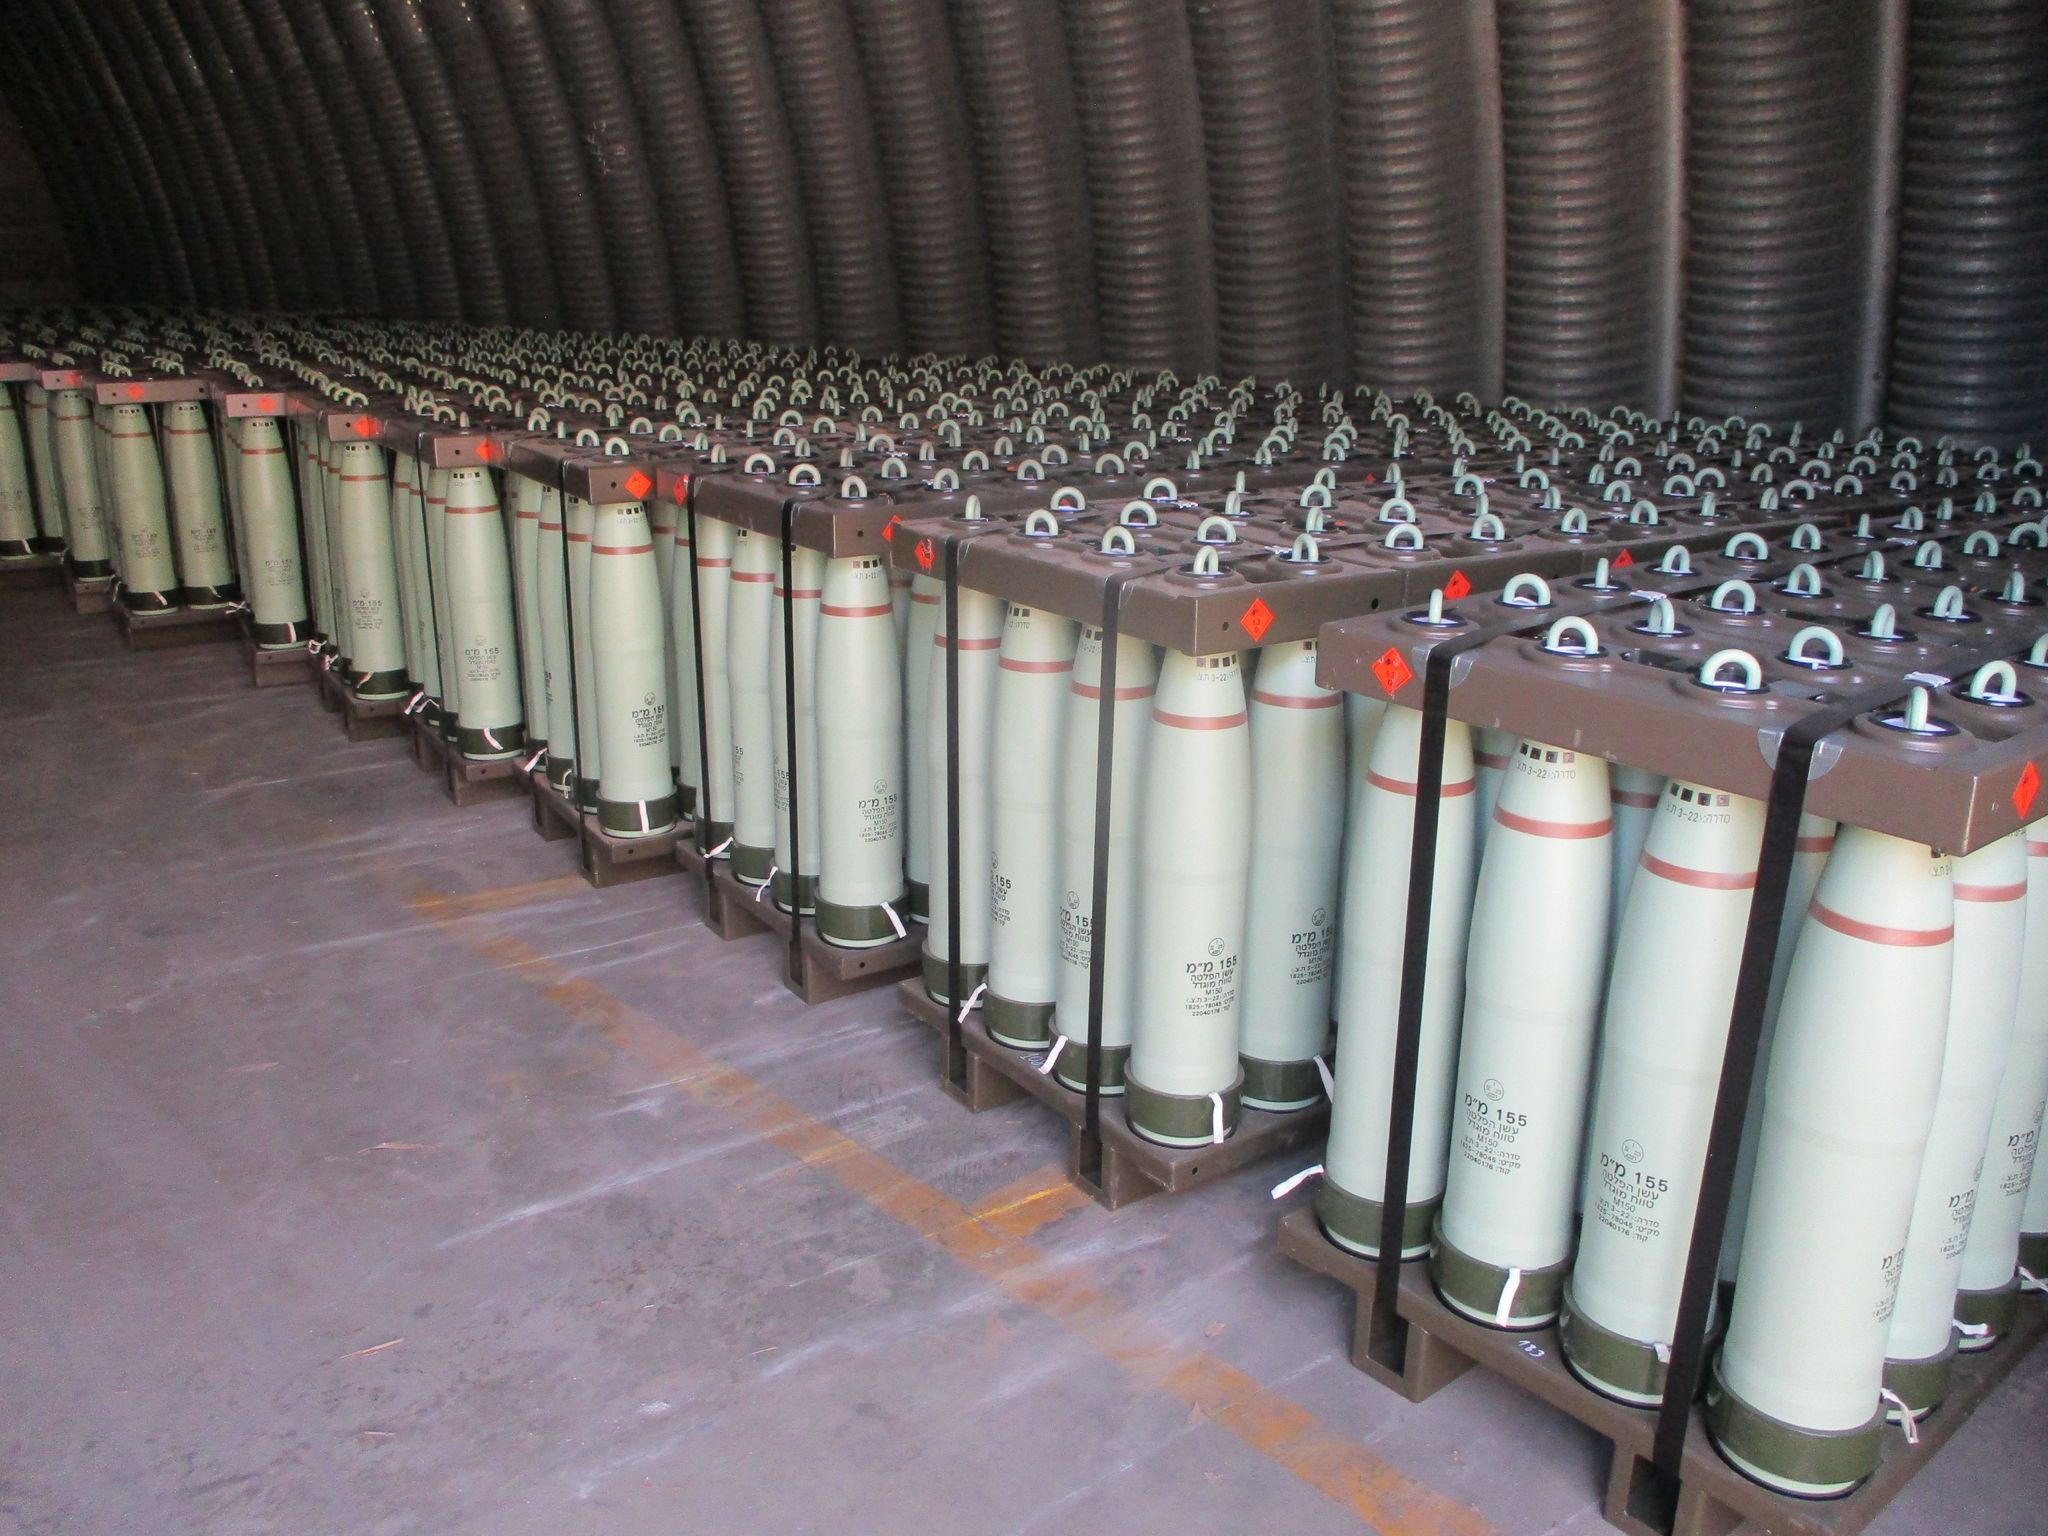 155-millimeter artillery shells